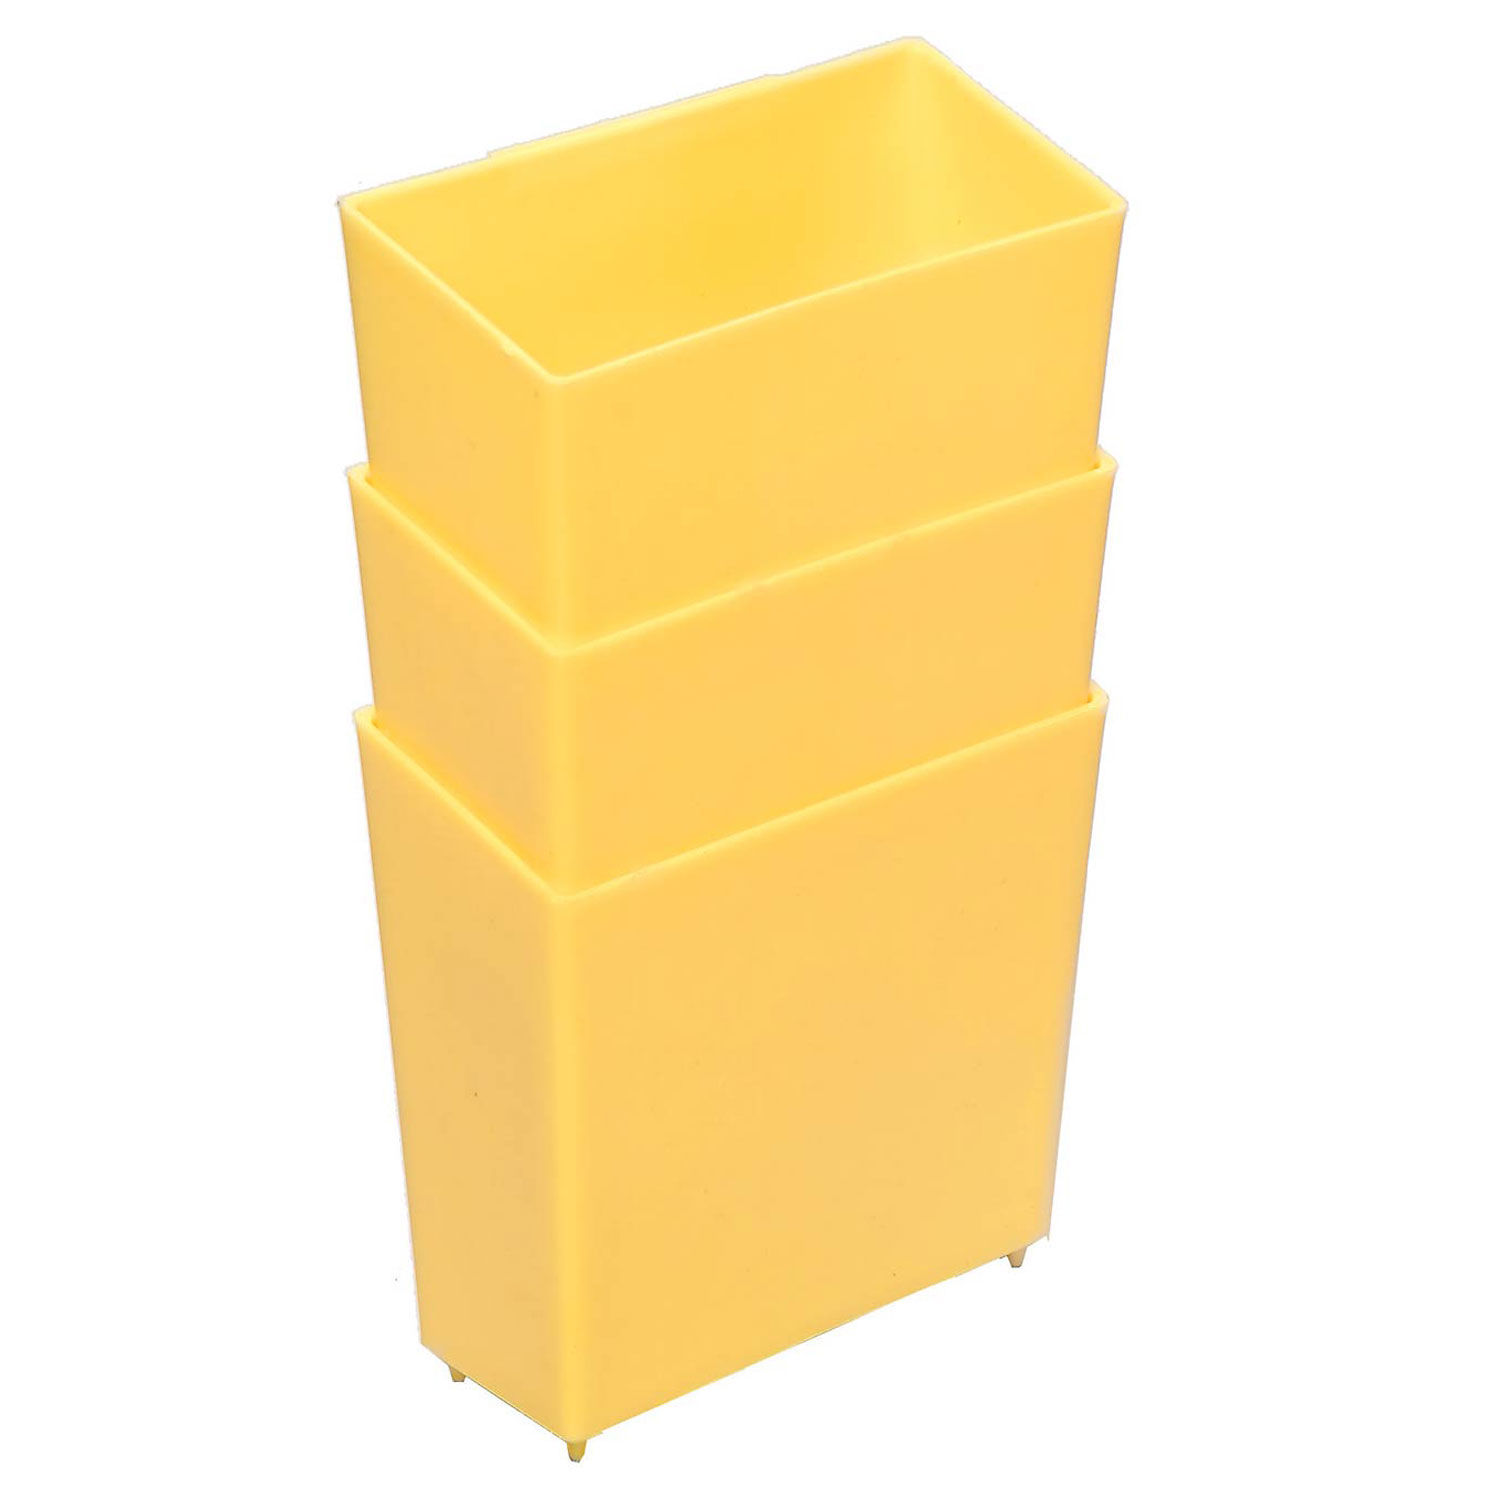 Plastic Little Bin For Plastic Bins - 4 x 2 x 4 Yellow, Lot of 50 - image 1 of 1